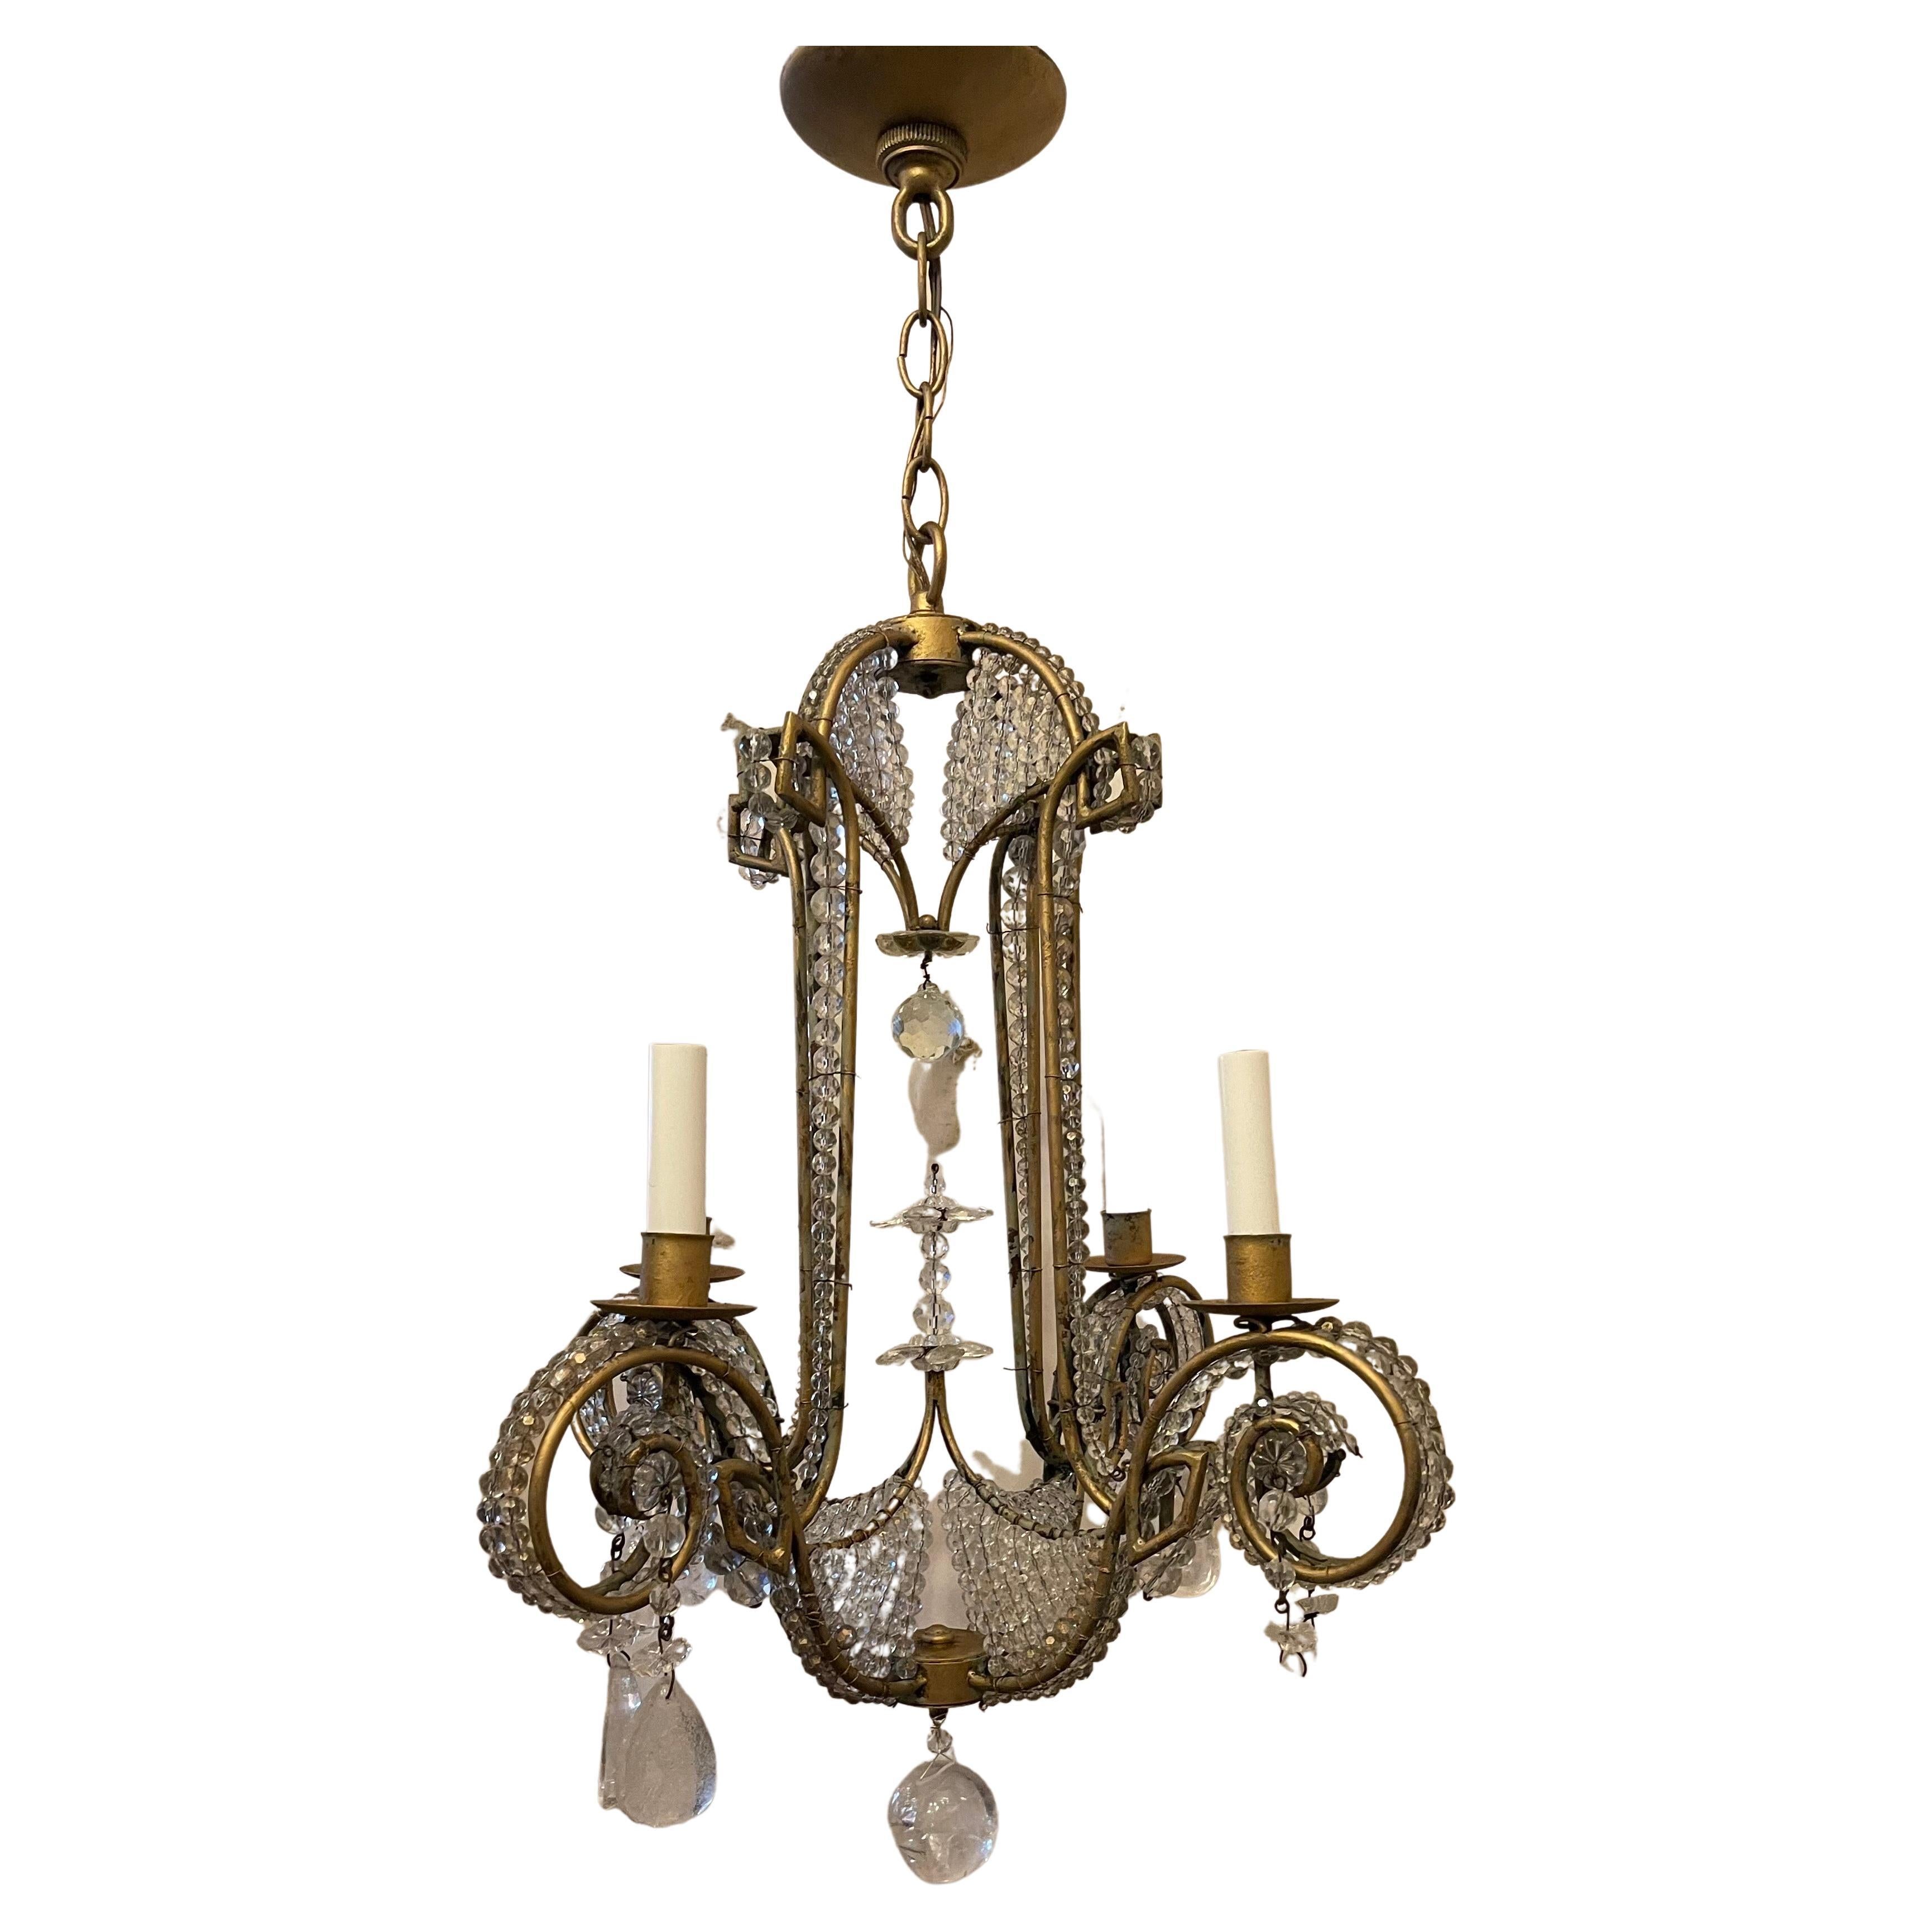 A wonderful Vintage Modern Niermann Weeks gold gilt four-light beaded with rock crystal drops chandelier in the manner of Maison Baguès.